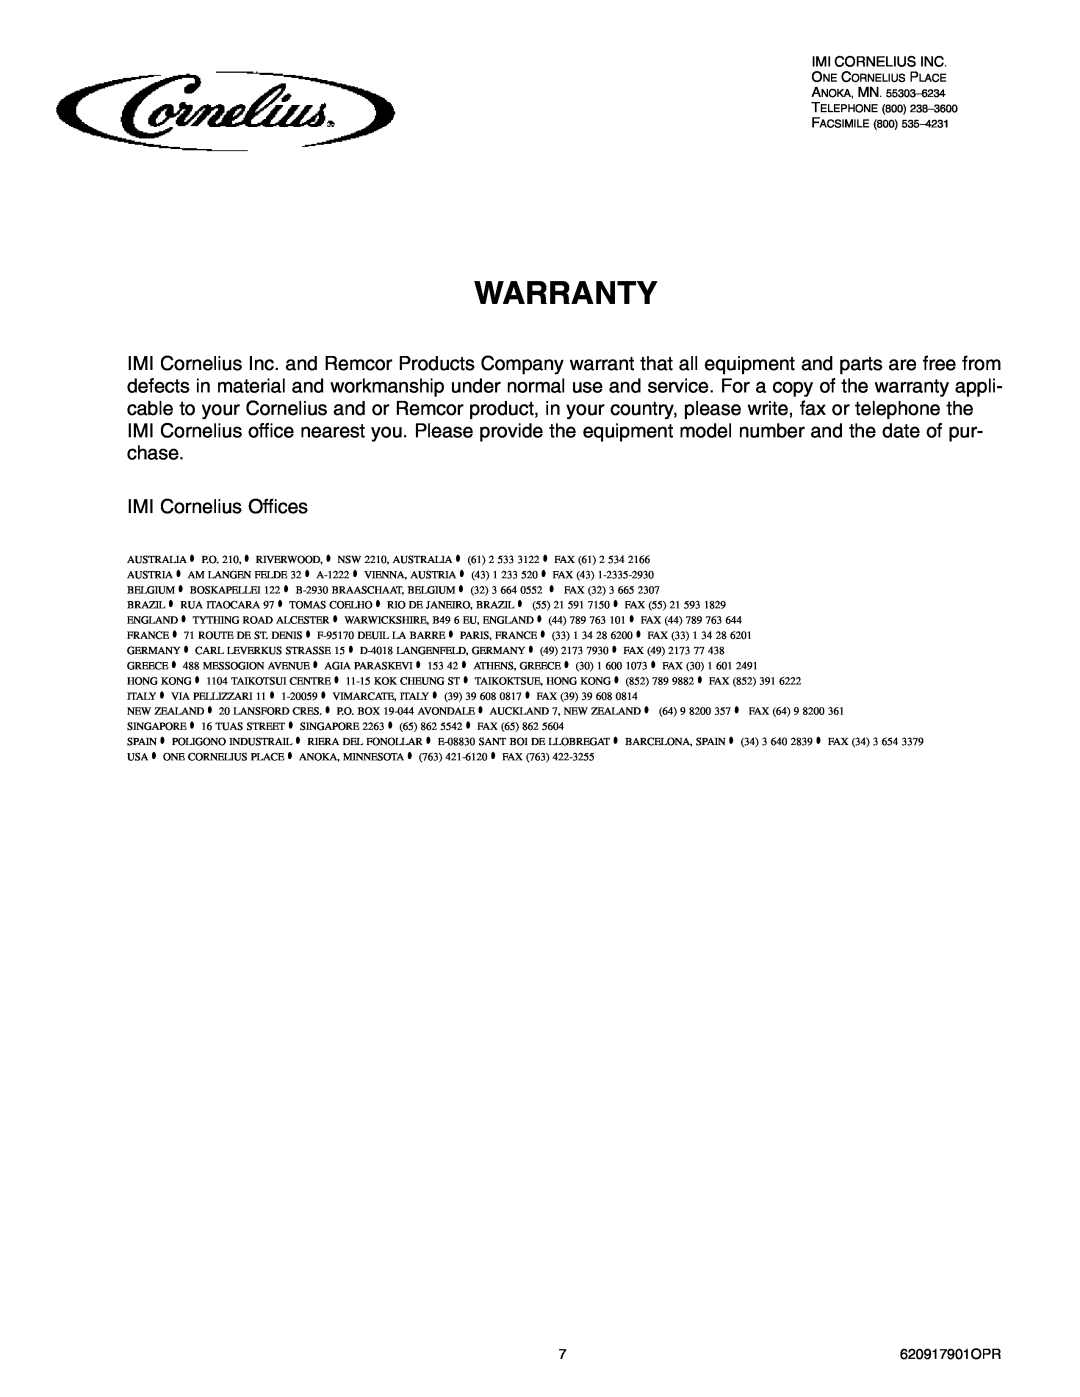 Cornelius 175 8 Valve manual Warranty, IMI Cornelius Offices, Imi Cornelius Inc, 620917901OPR 